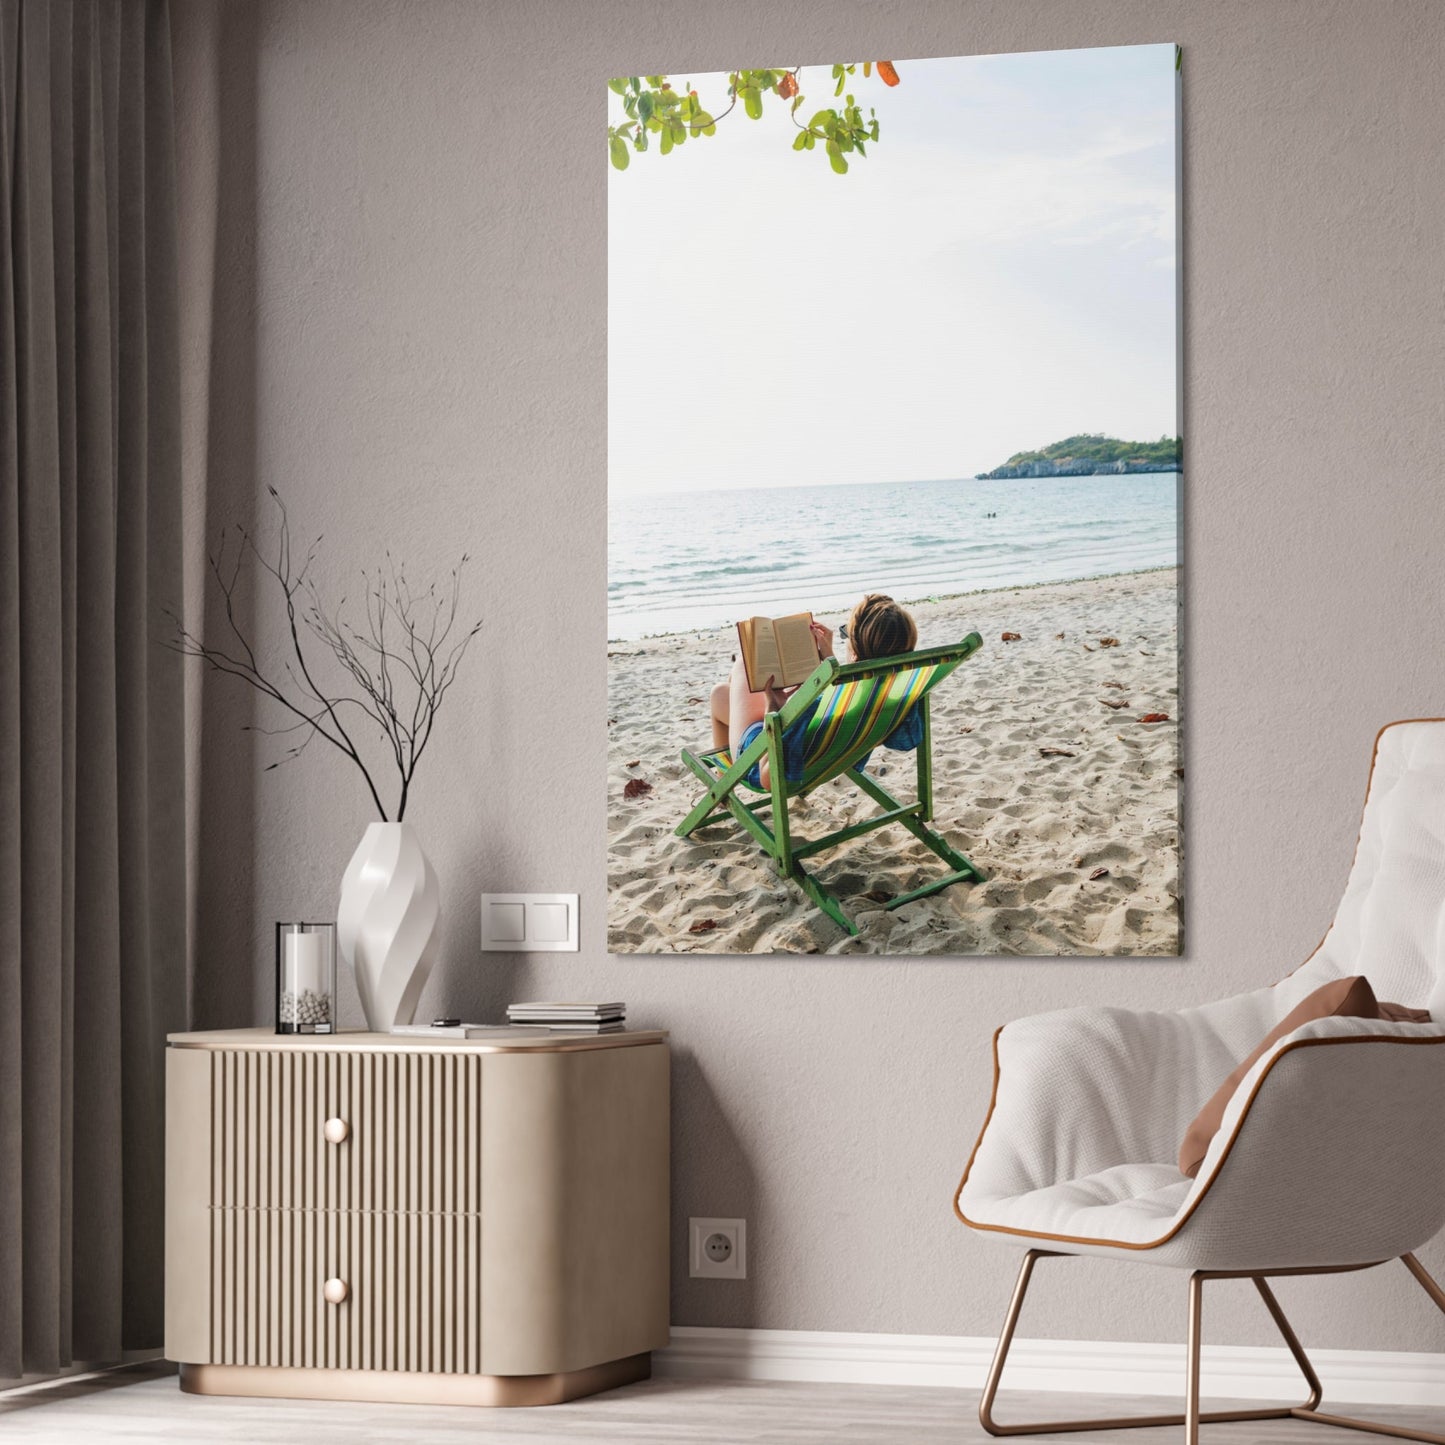 Serene Solitude: A Relaxing Wall Art on Framed Canvas